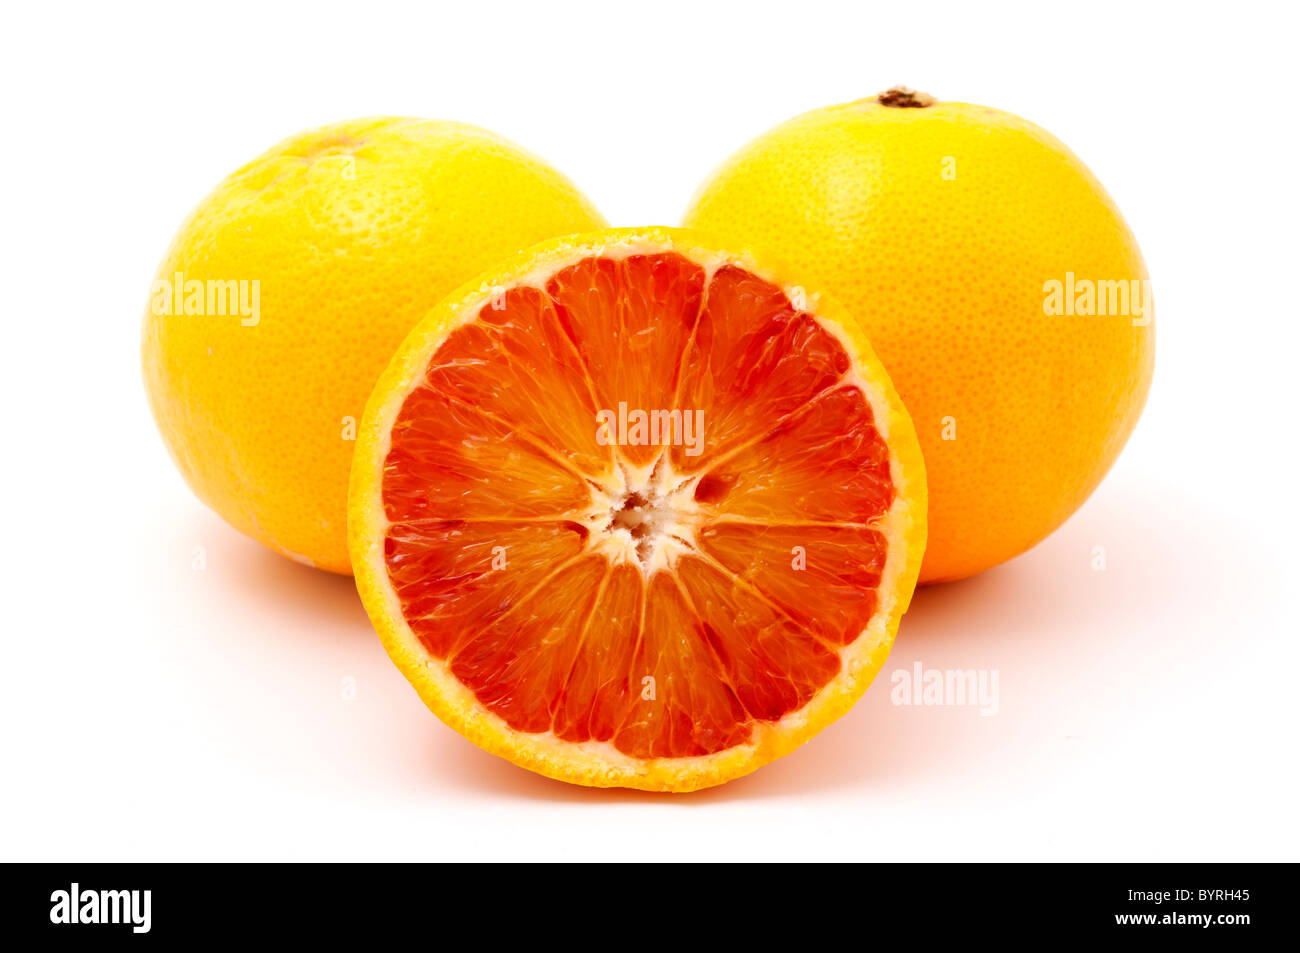 Blood oranges on a white background Stock Photo